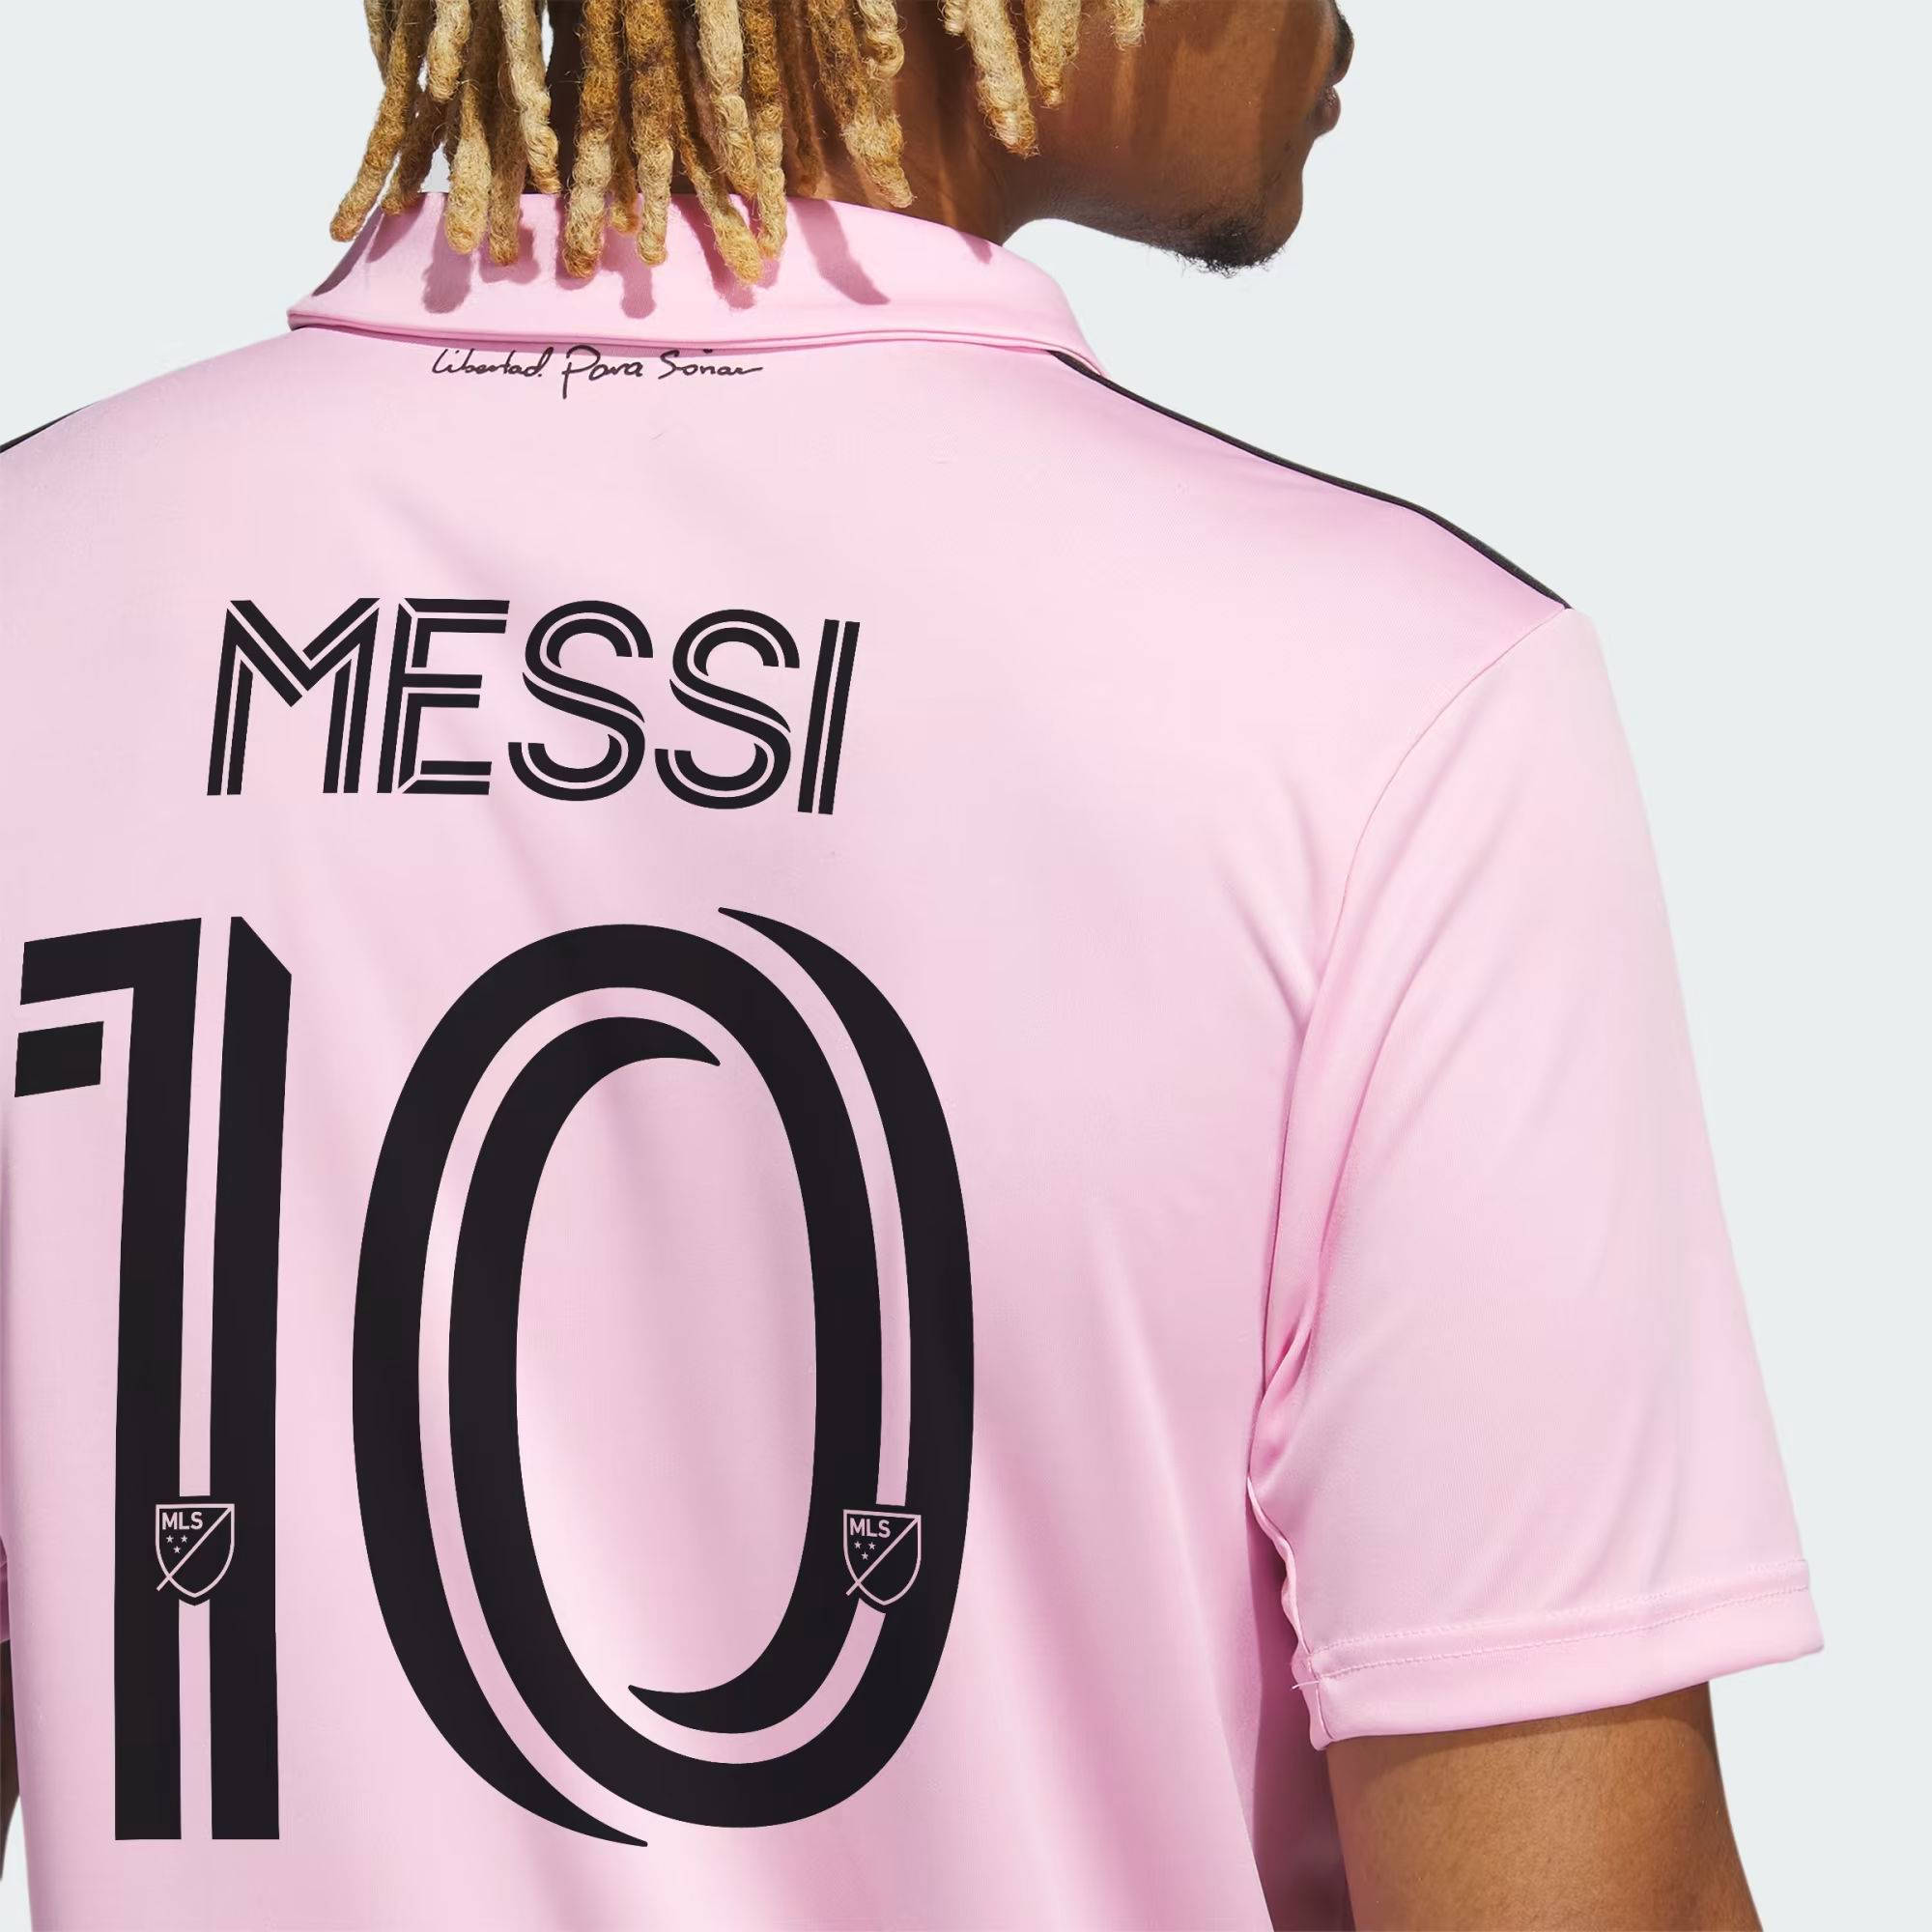 No 3rd Kit for Messi's Inter Miami? Adidas MLS 2023 Third Kits